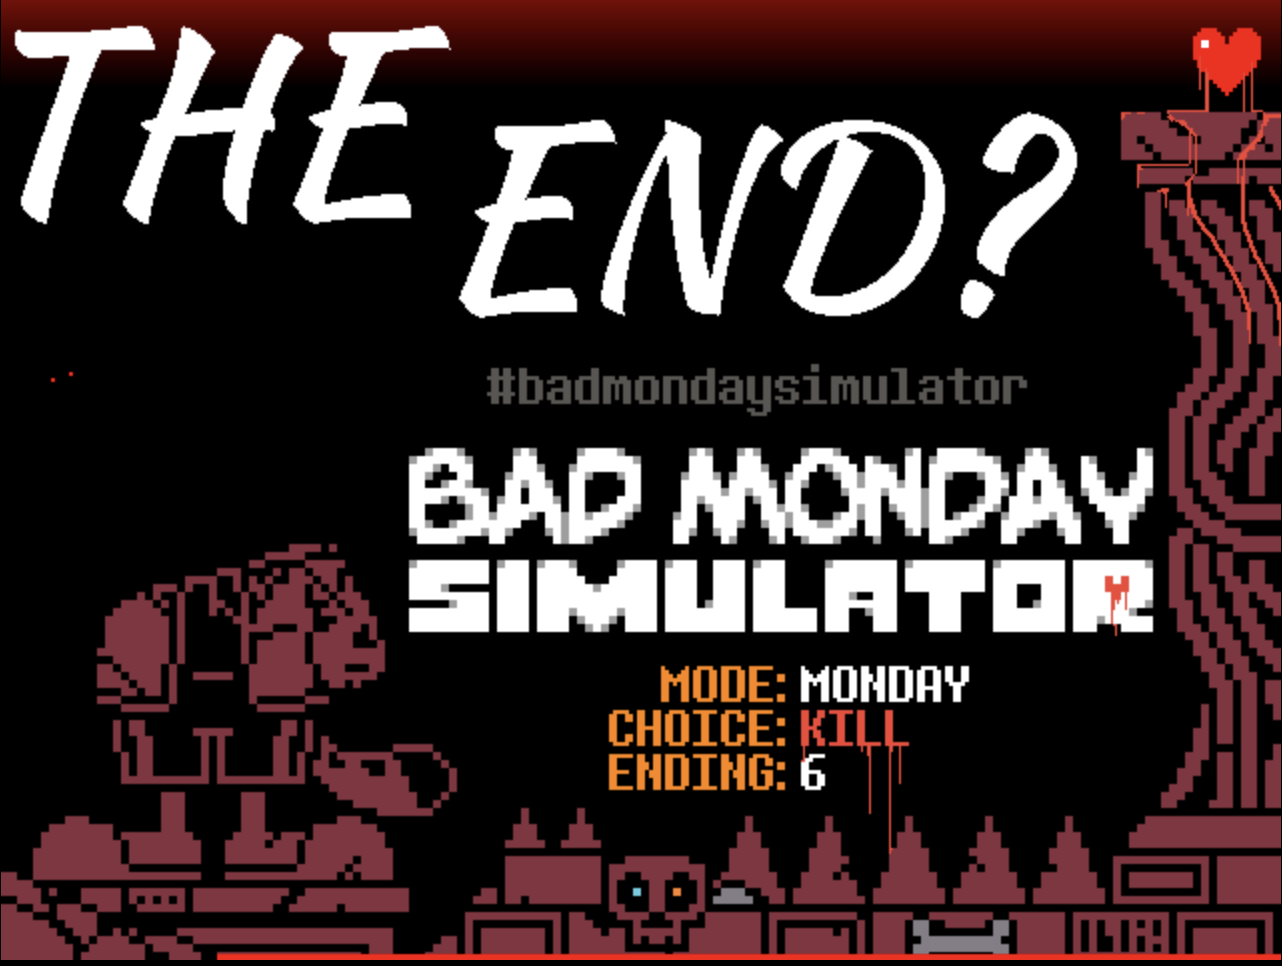 Undergarf: Bad Monday Simulator - Play Online on Snokido